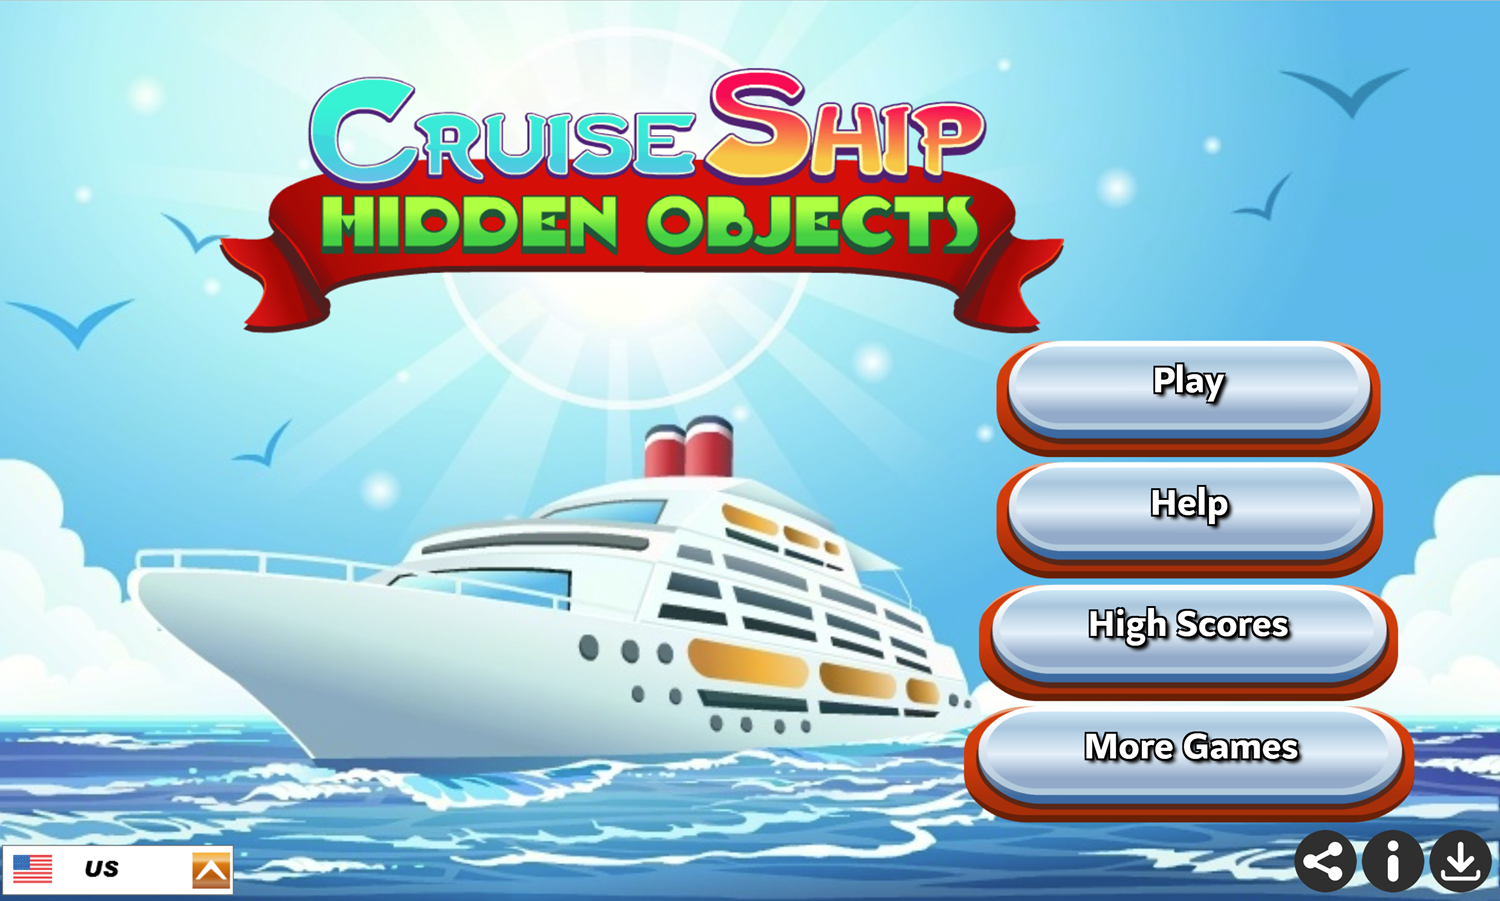 Cruise Ship Hidden Objects Game Welcome Screen Screenshot.